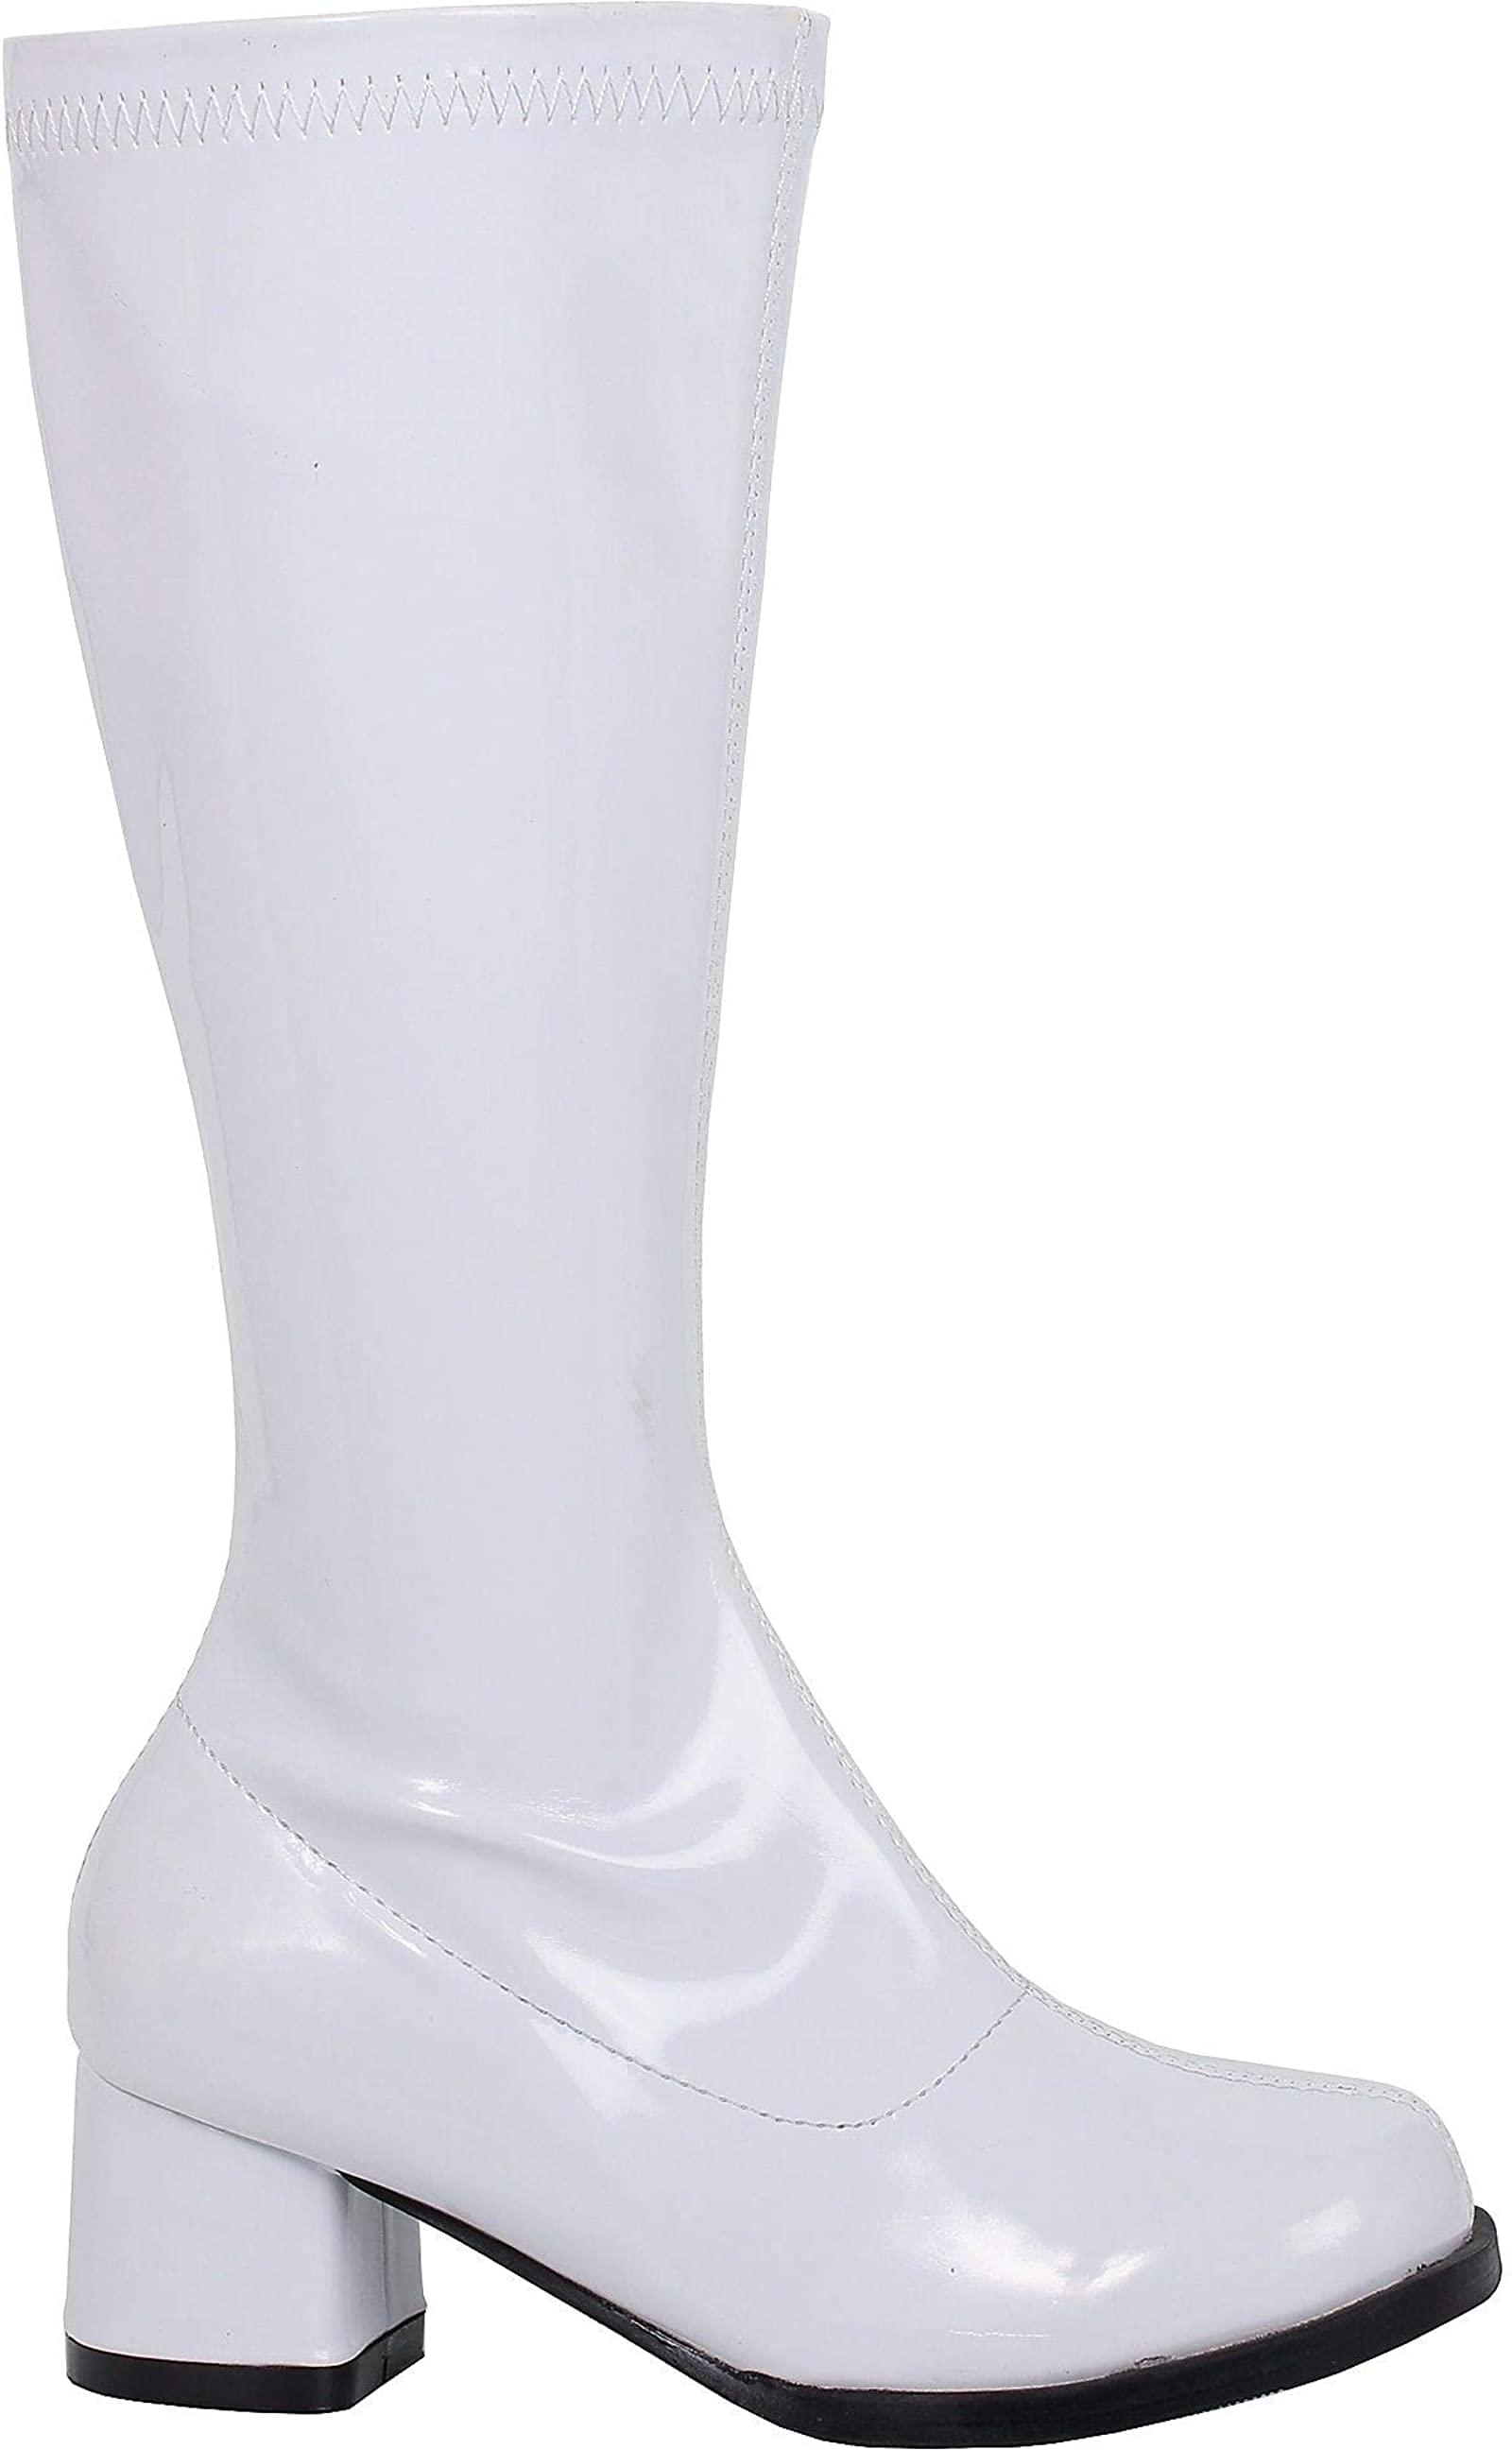 1.75 Heel Children's Gogo Boot White